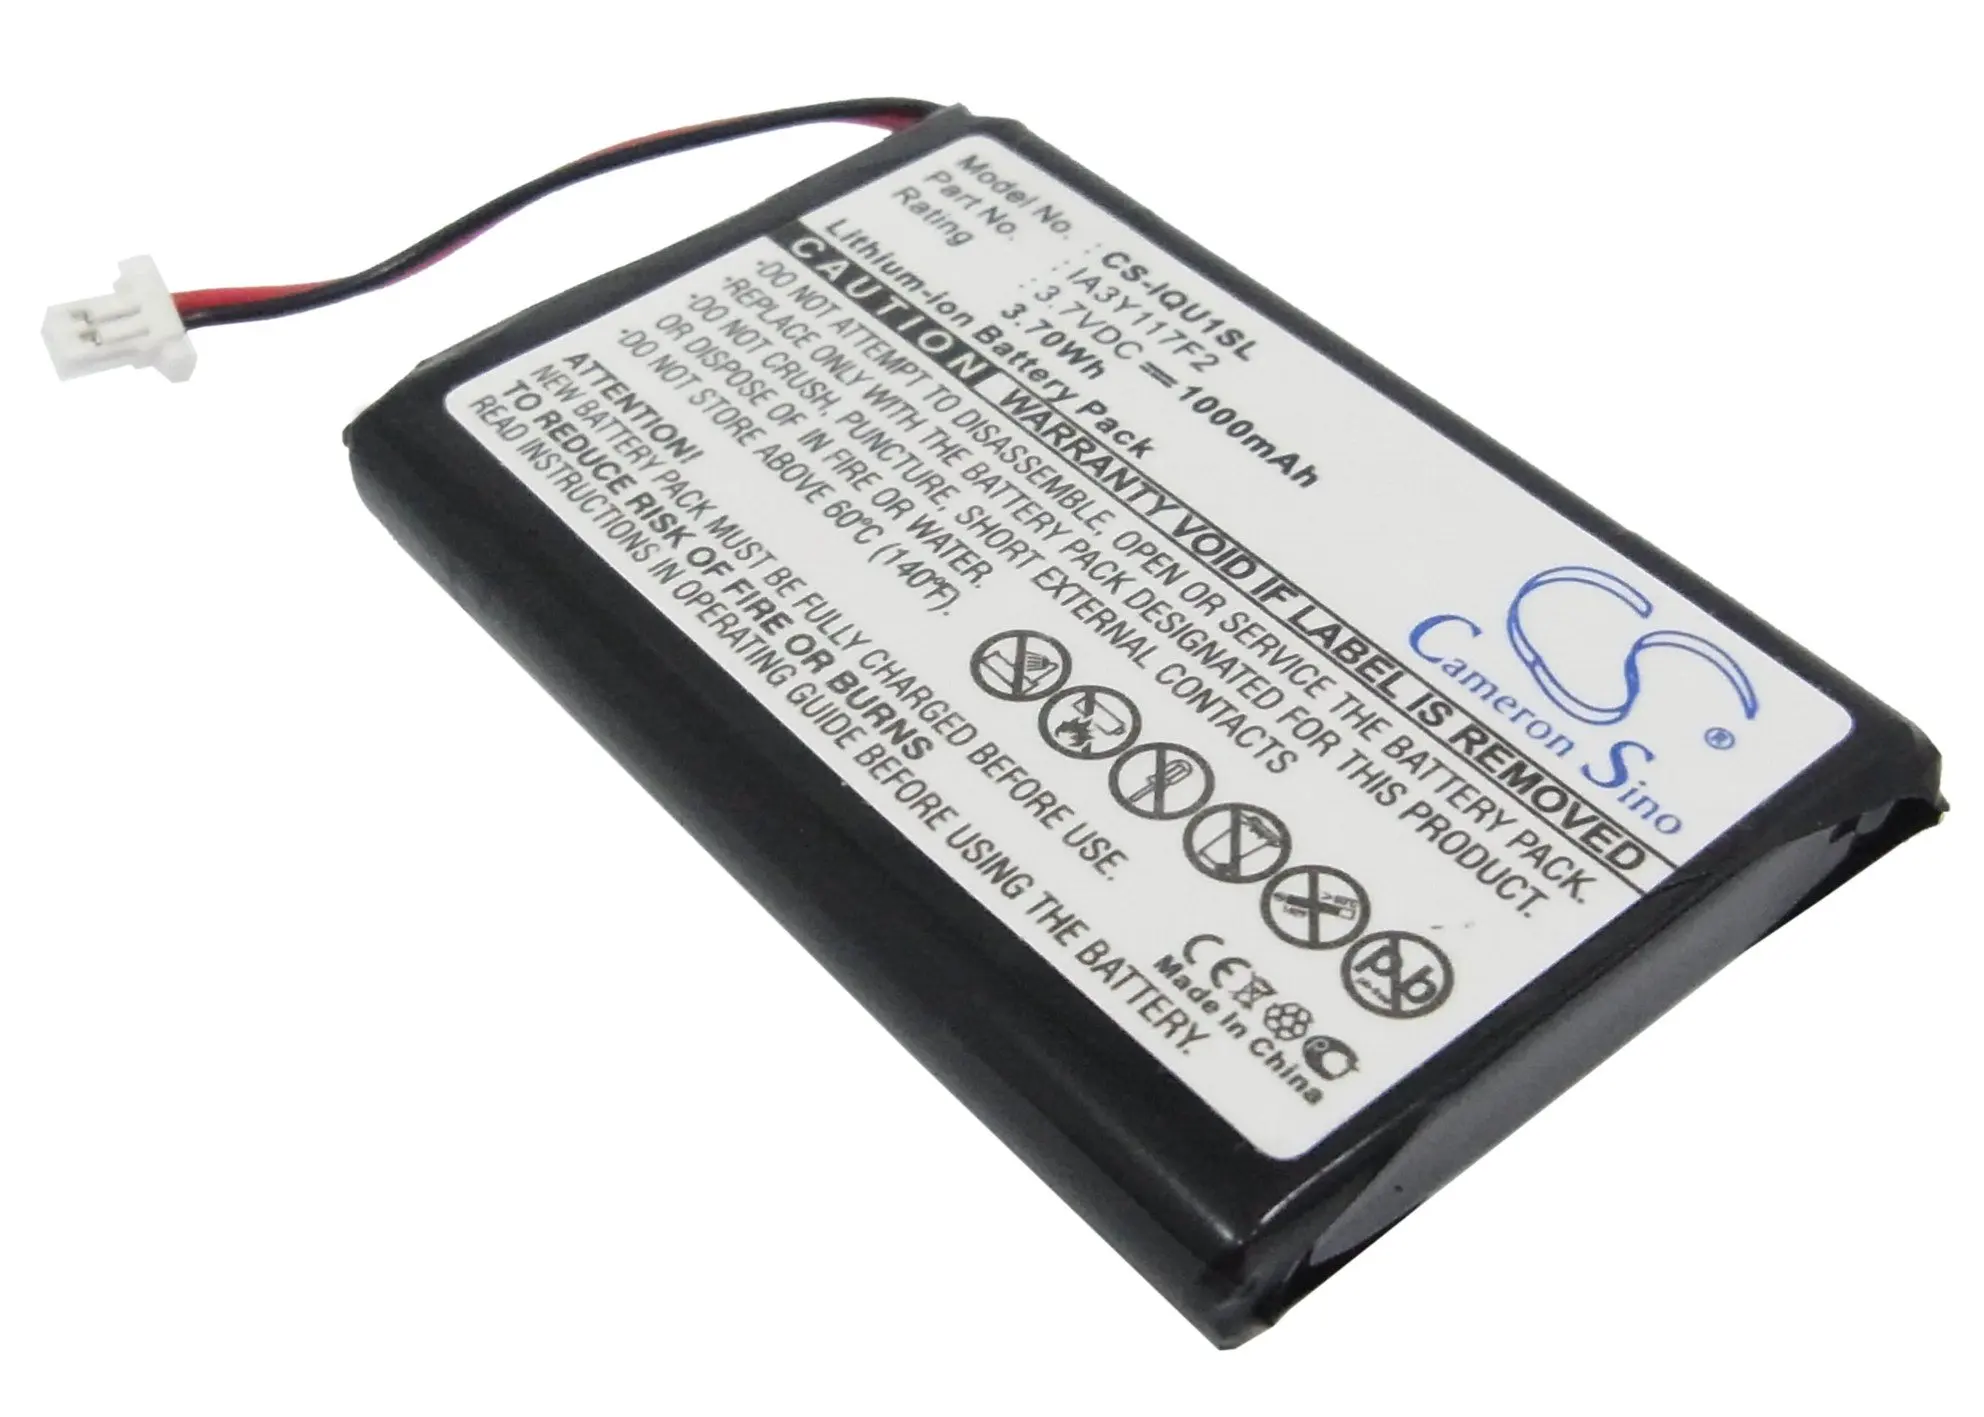 Rechargeable Battery Motorola NLN7434A 2-Way Radio Battery Ni-CD 12.5V 1000mAh Replacement for Motorola NLN7434A Battery